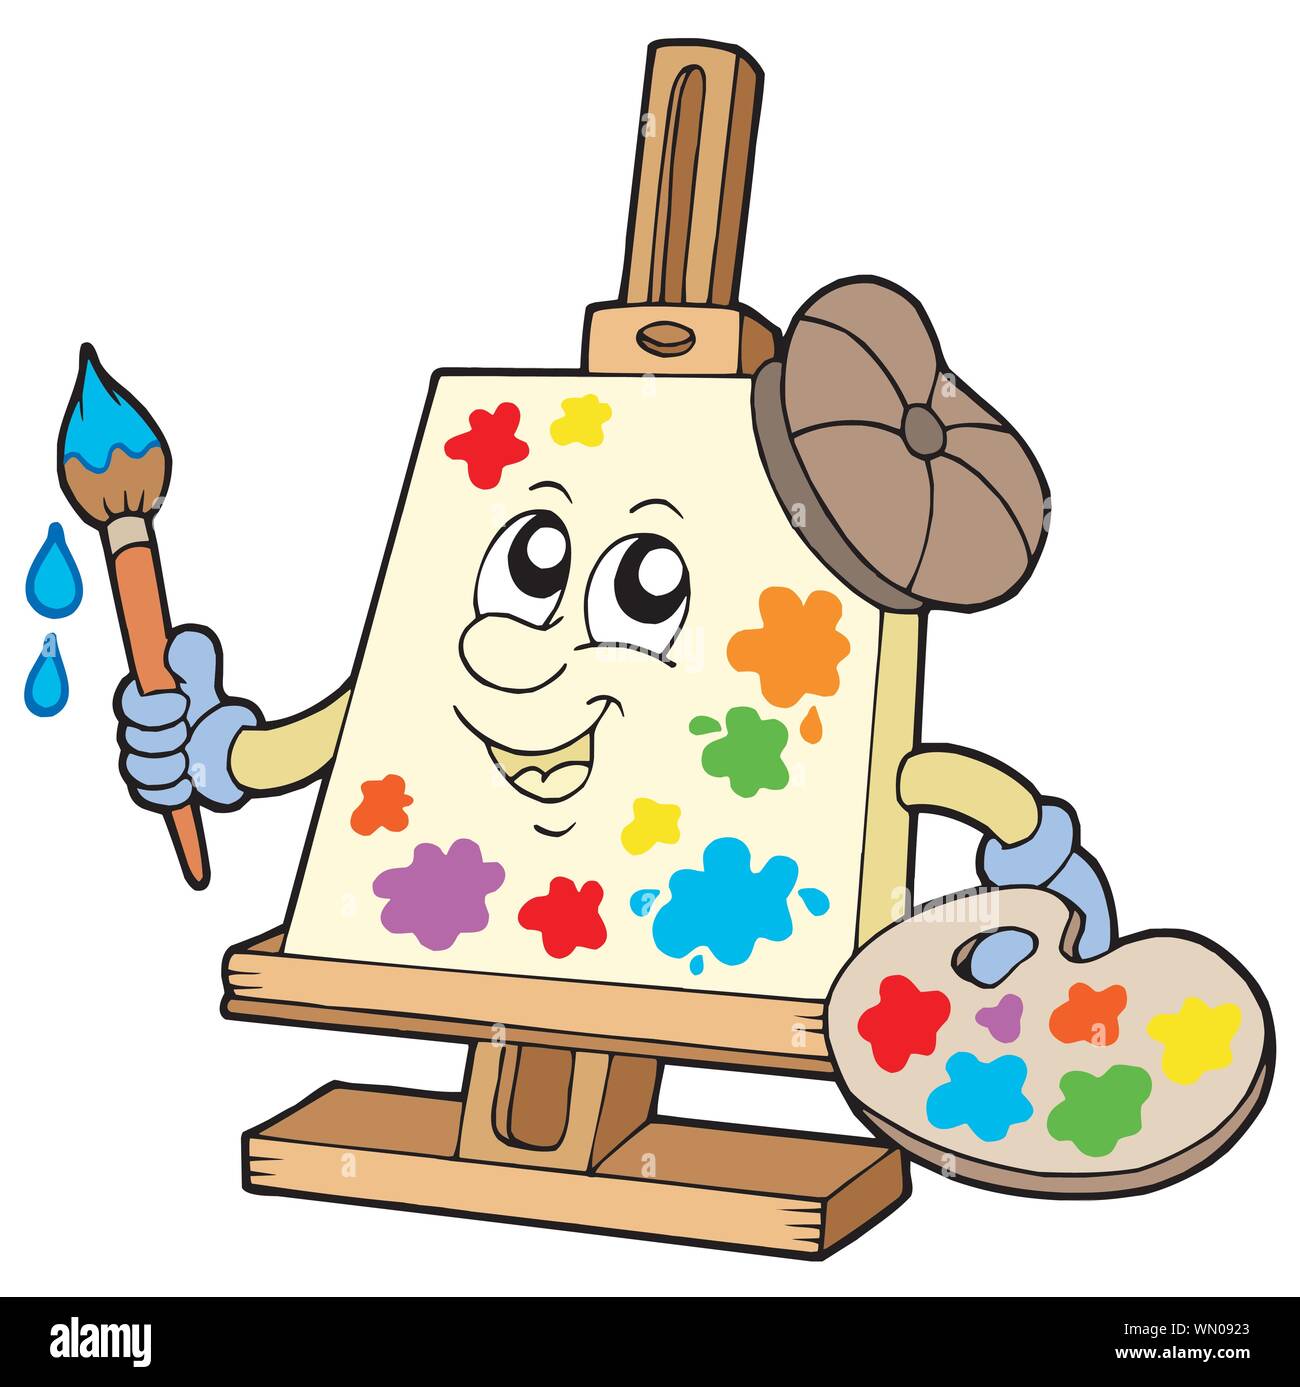 Детский мольберт с красками и карандашами